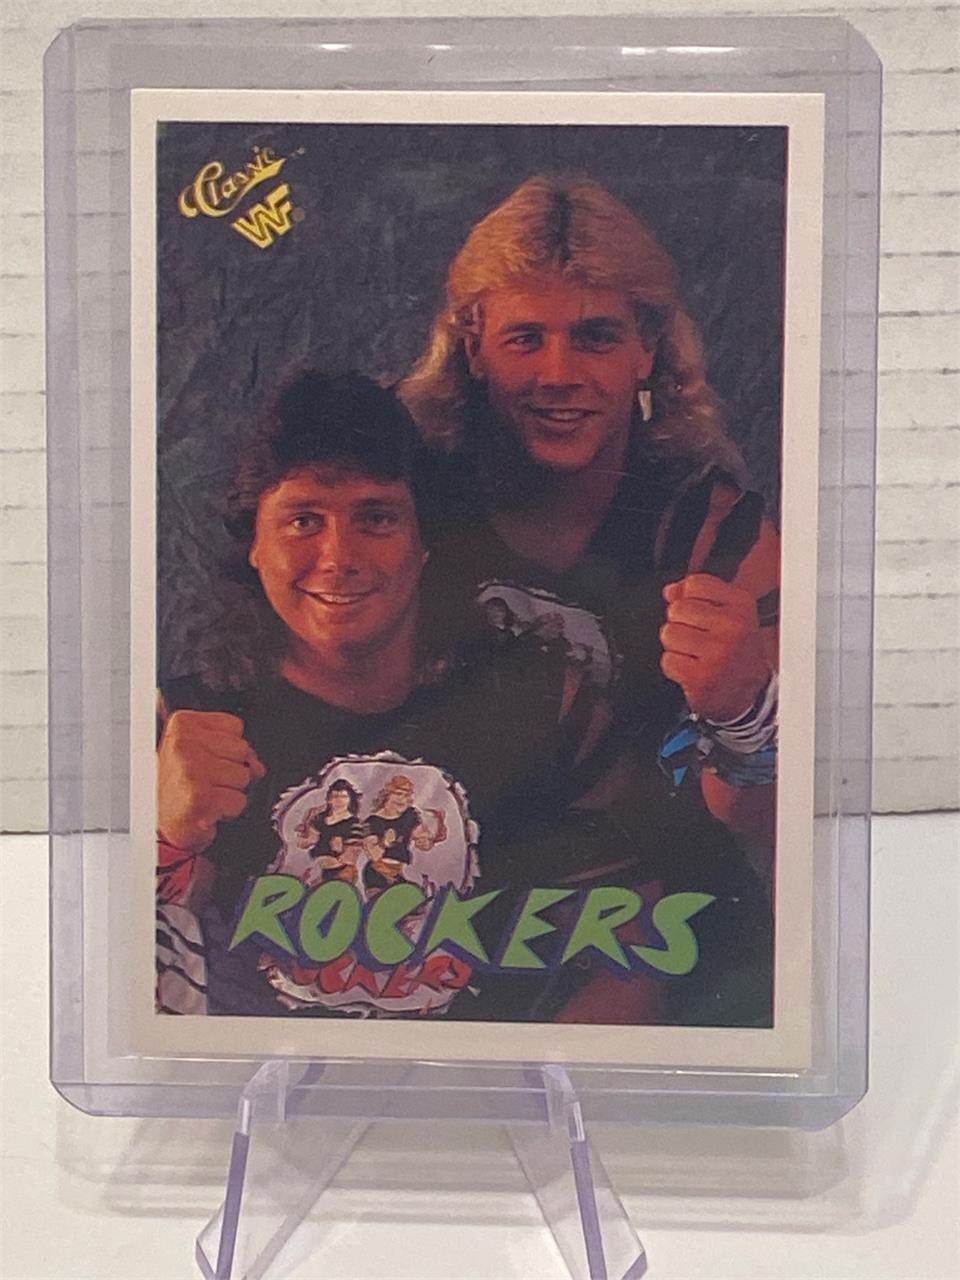 Rockers “Shawn Michaels” Classic WWF Card